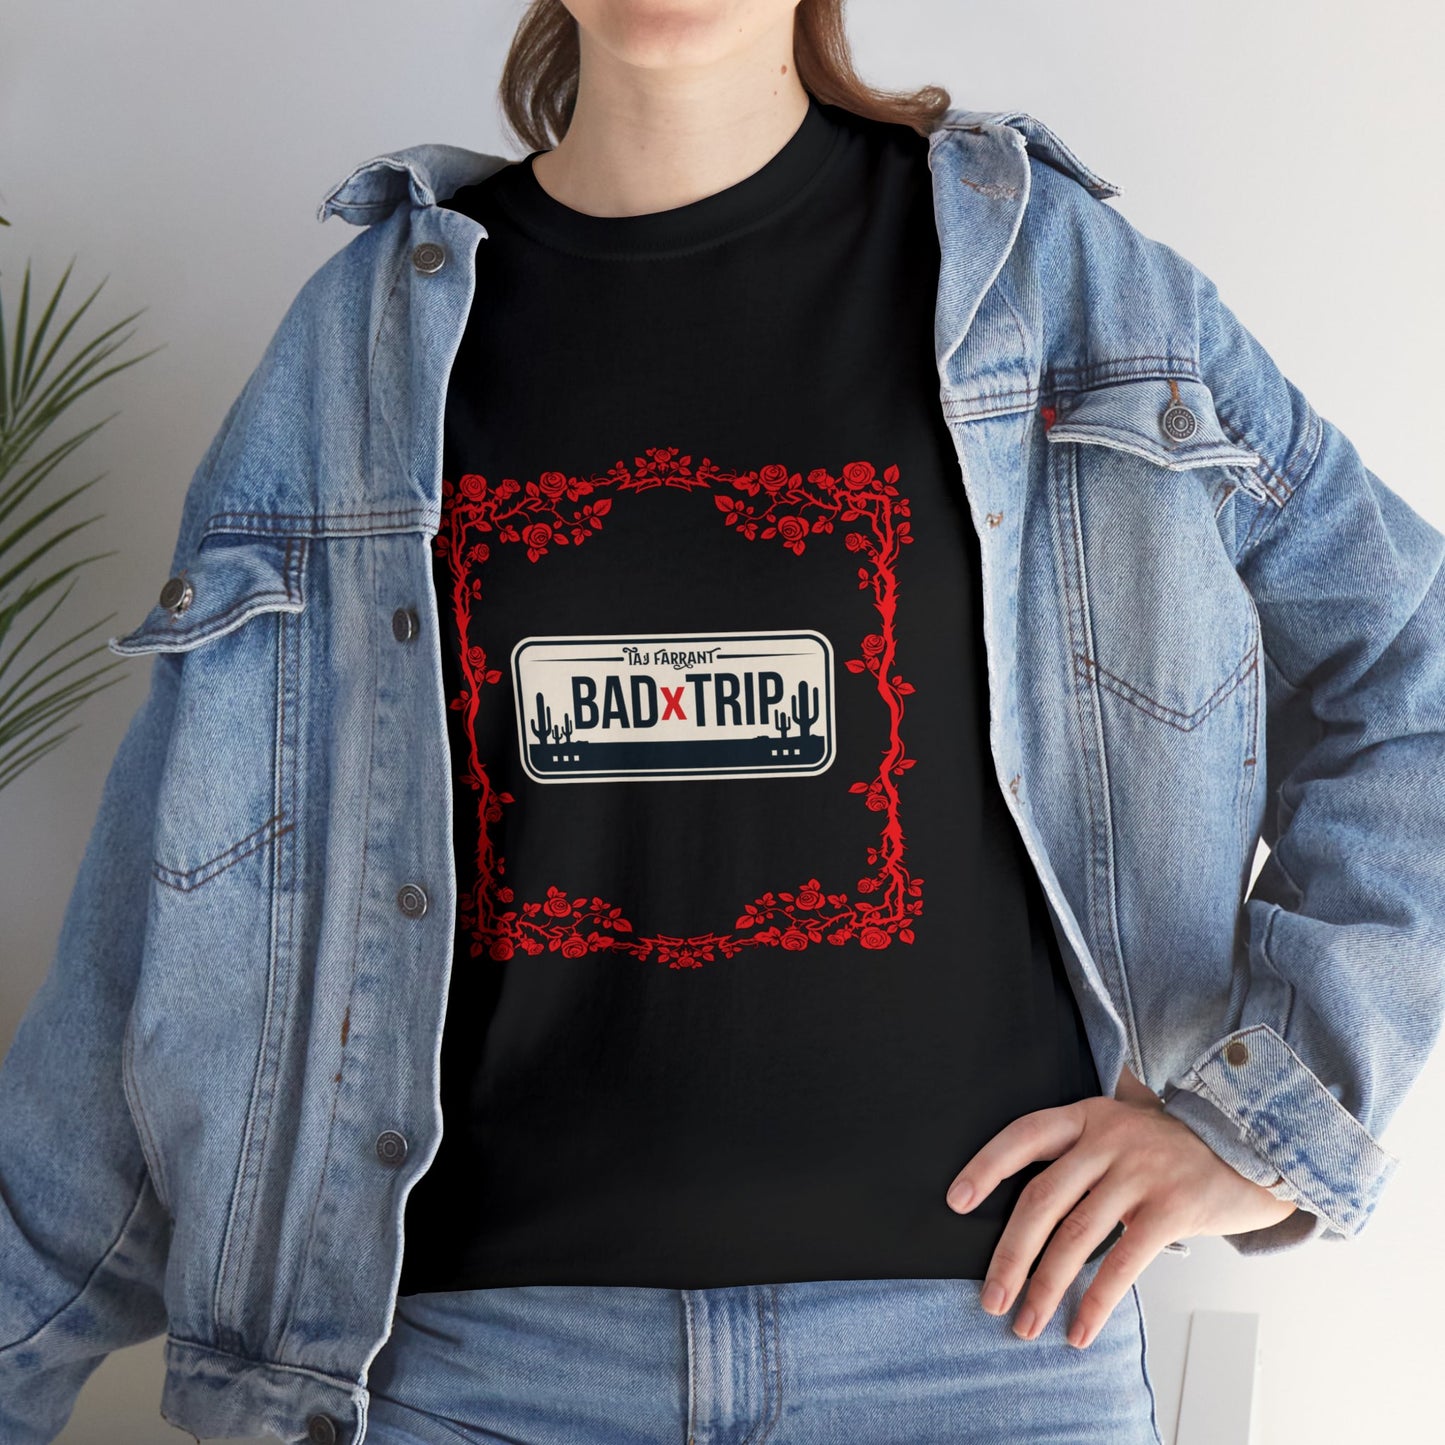 Taj Farrant "Bad Trip" Album Cover Shirt (Unisex)